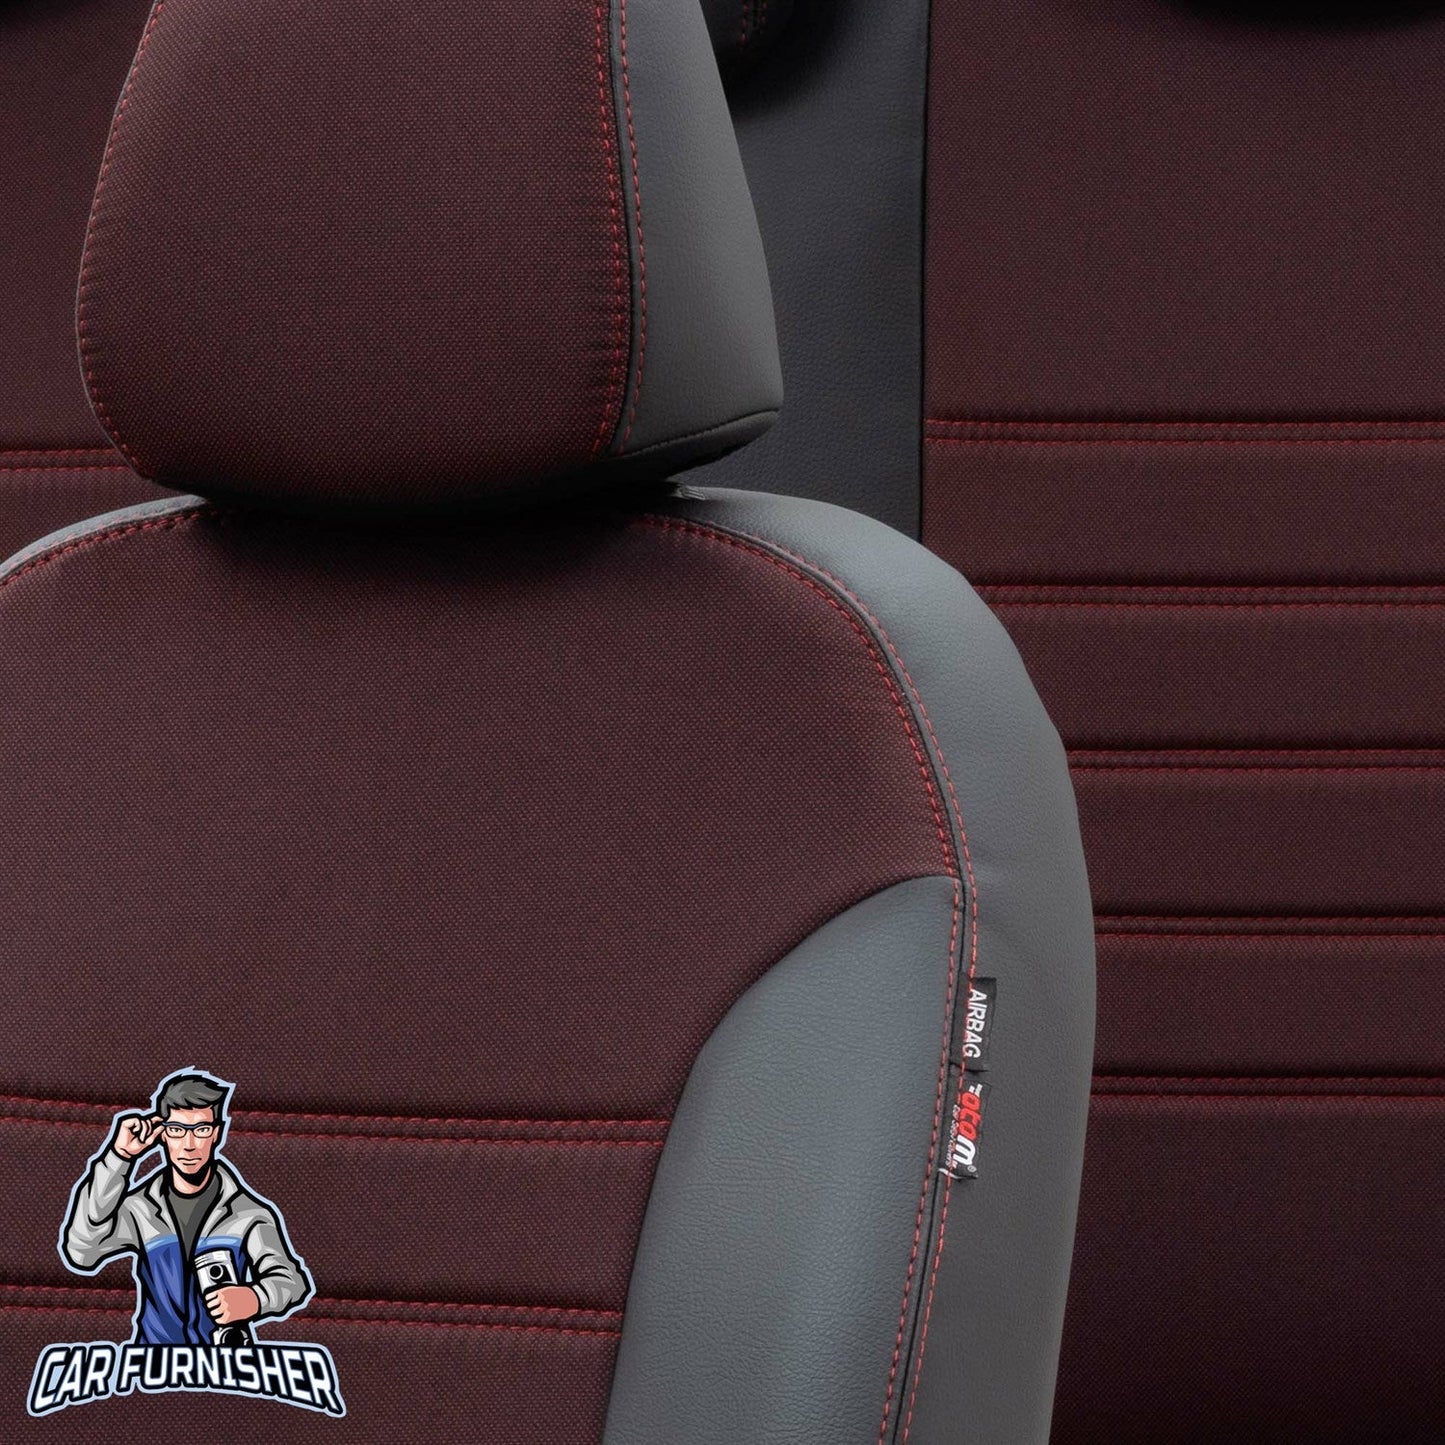 Volkswagen Tiguan Seat Cover Paris Leather & Jacquard Design Red Leather & Jacquard Fabric